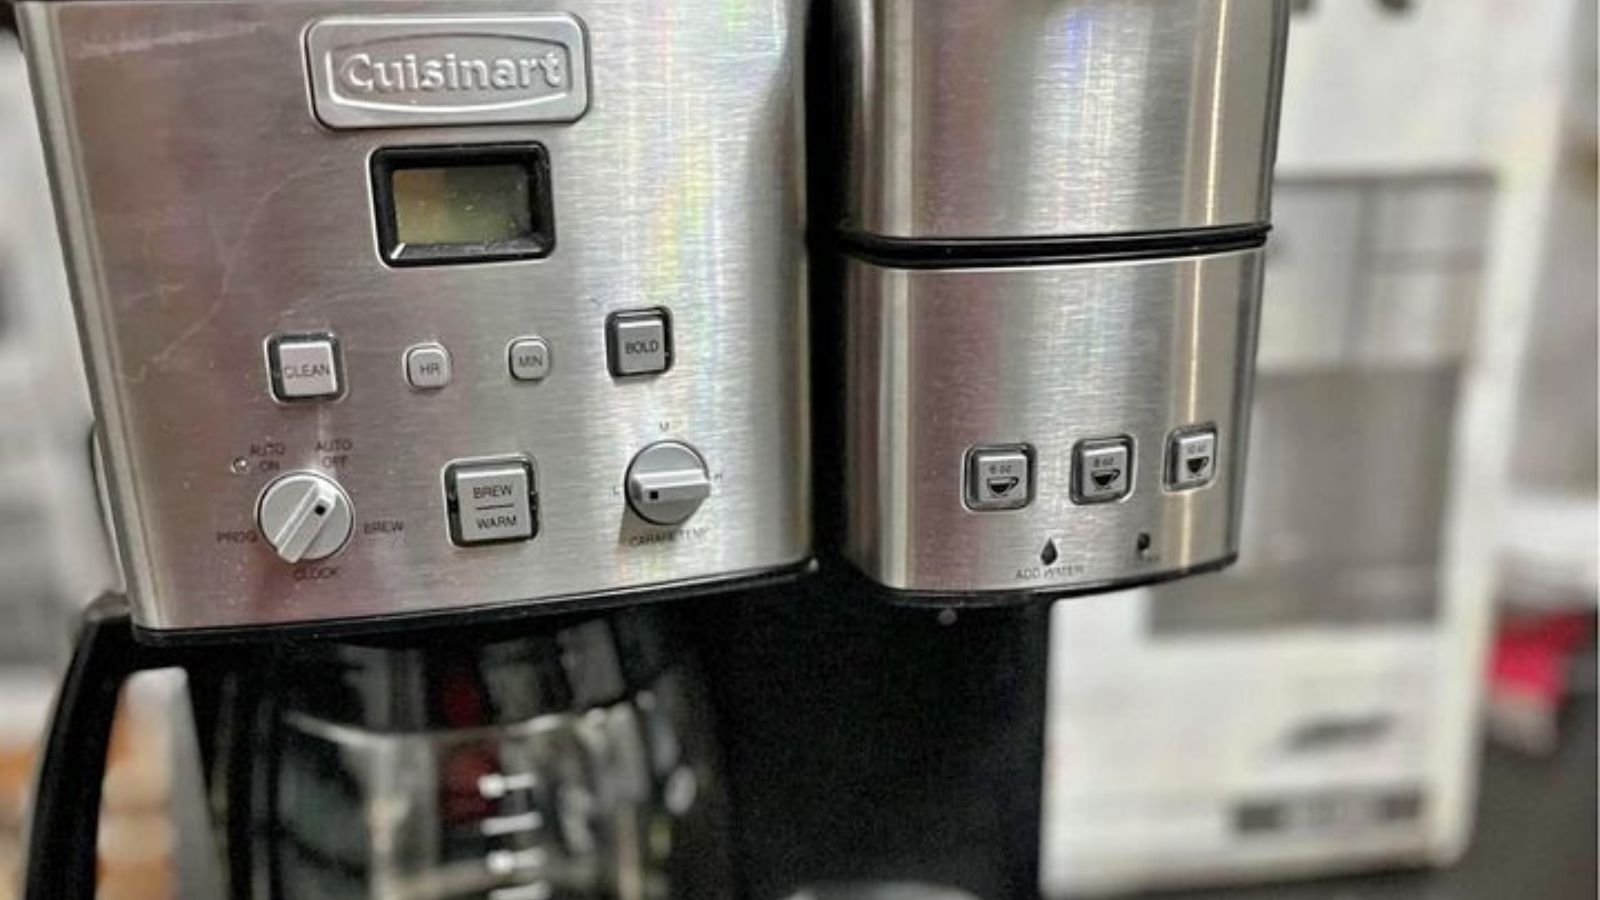 Cuisinart coffee maker machine - familyguidecentral.com